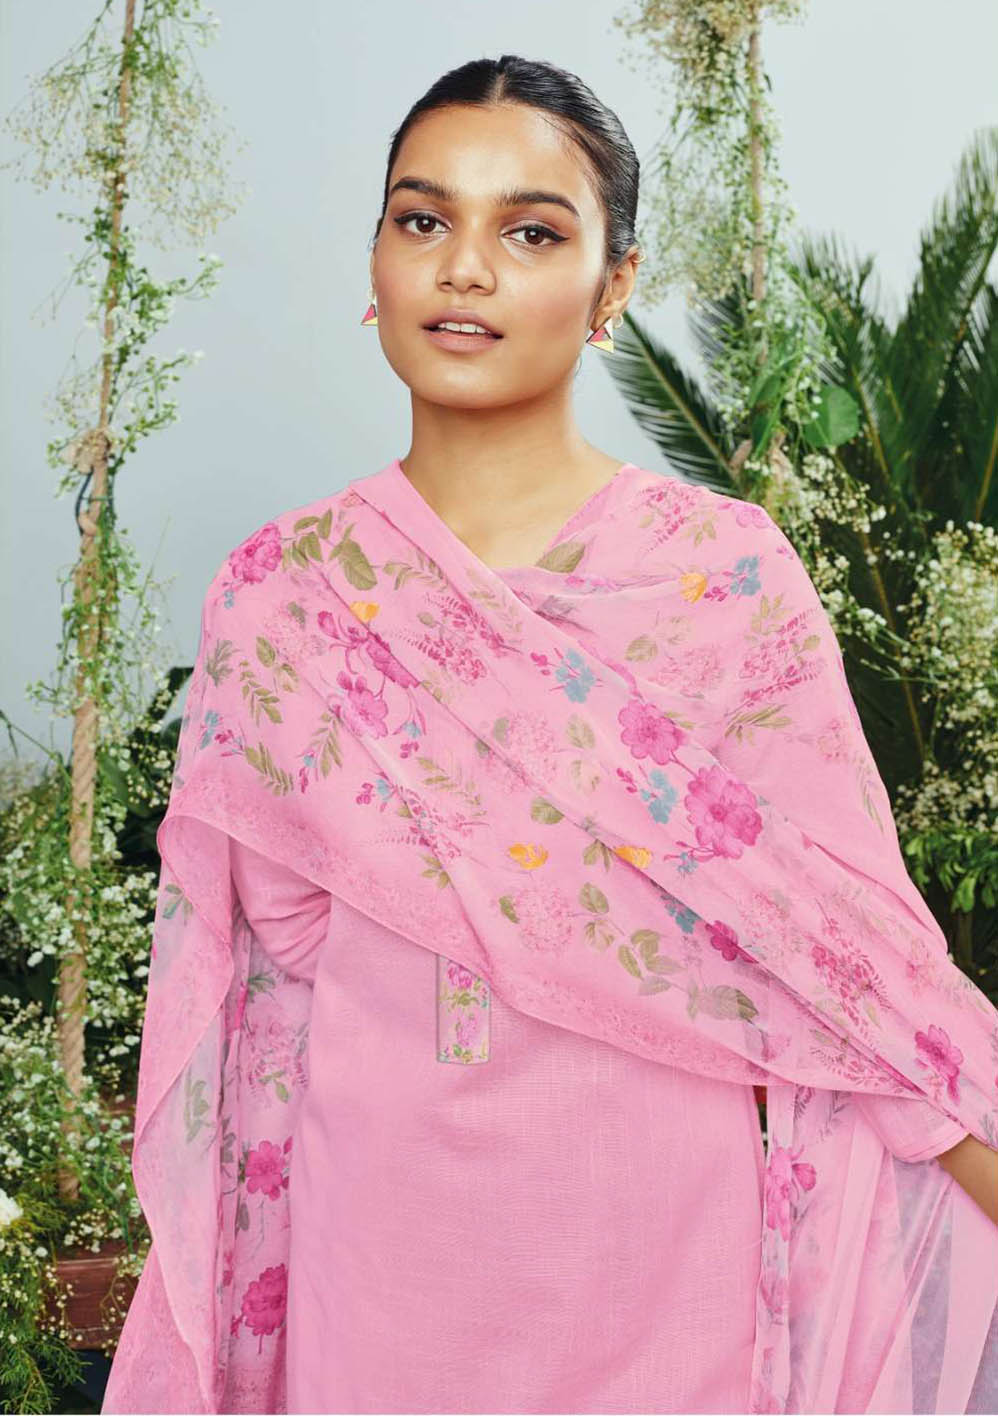 Ganga Premium Cotton Linen Unstitched Pink Women Suit Material Ganga